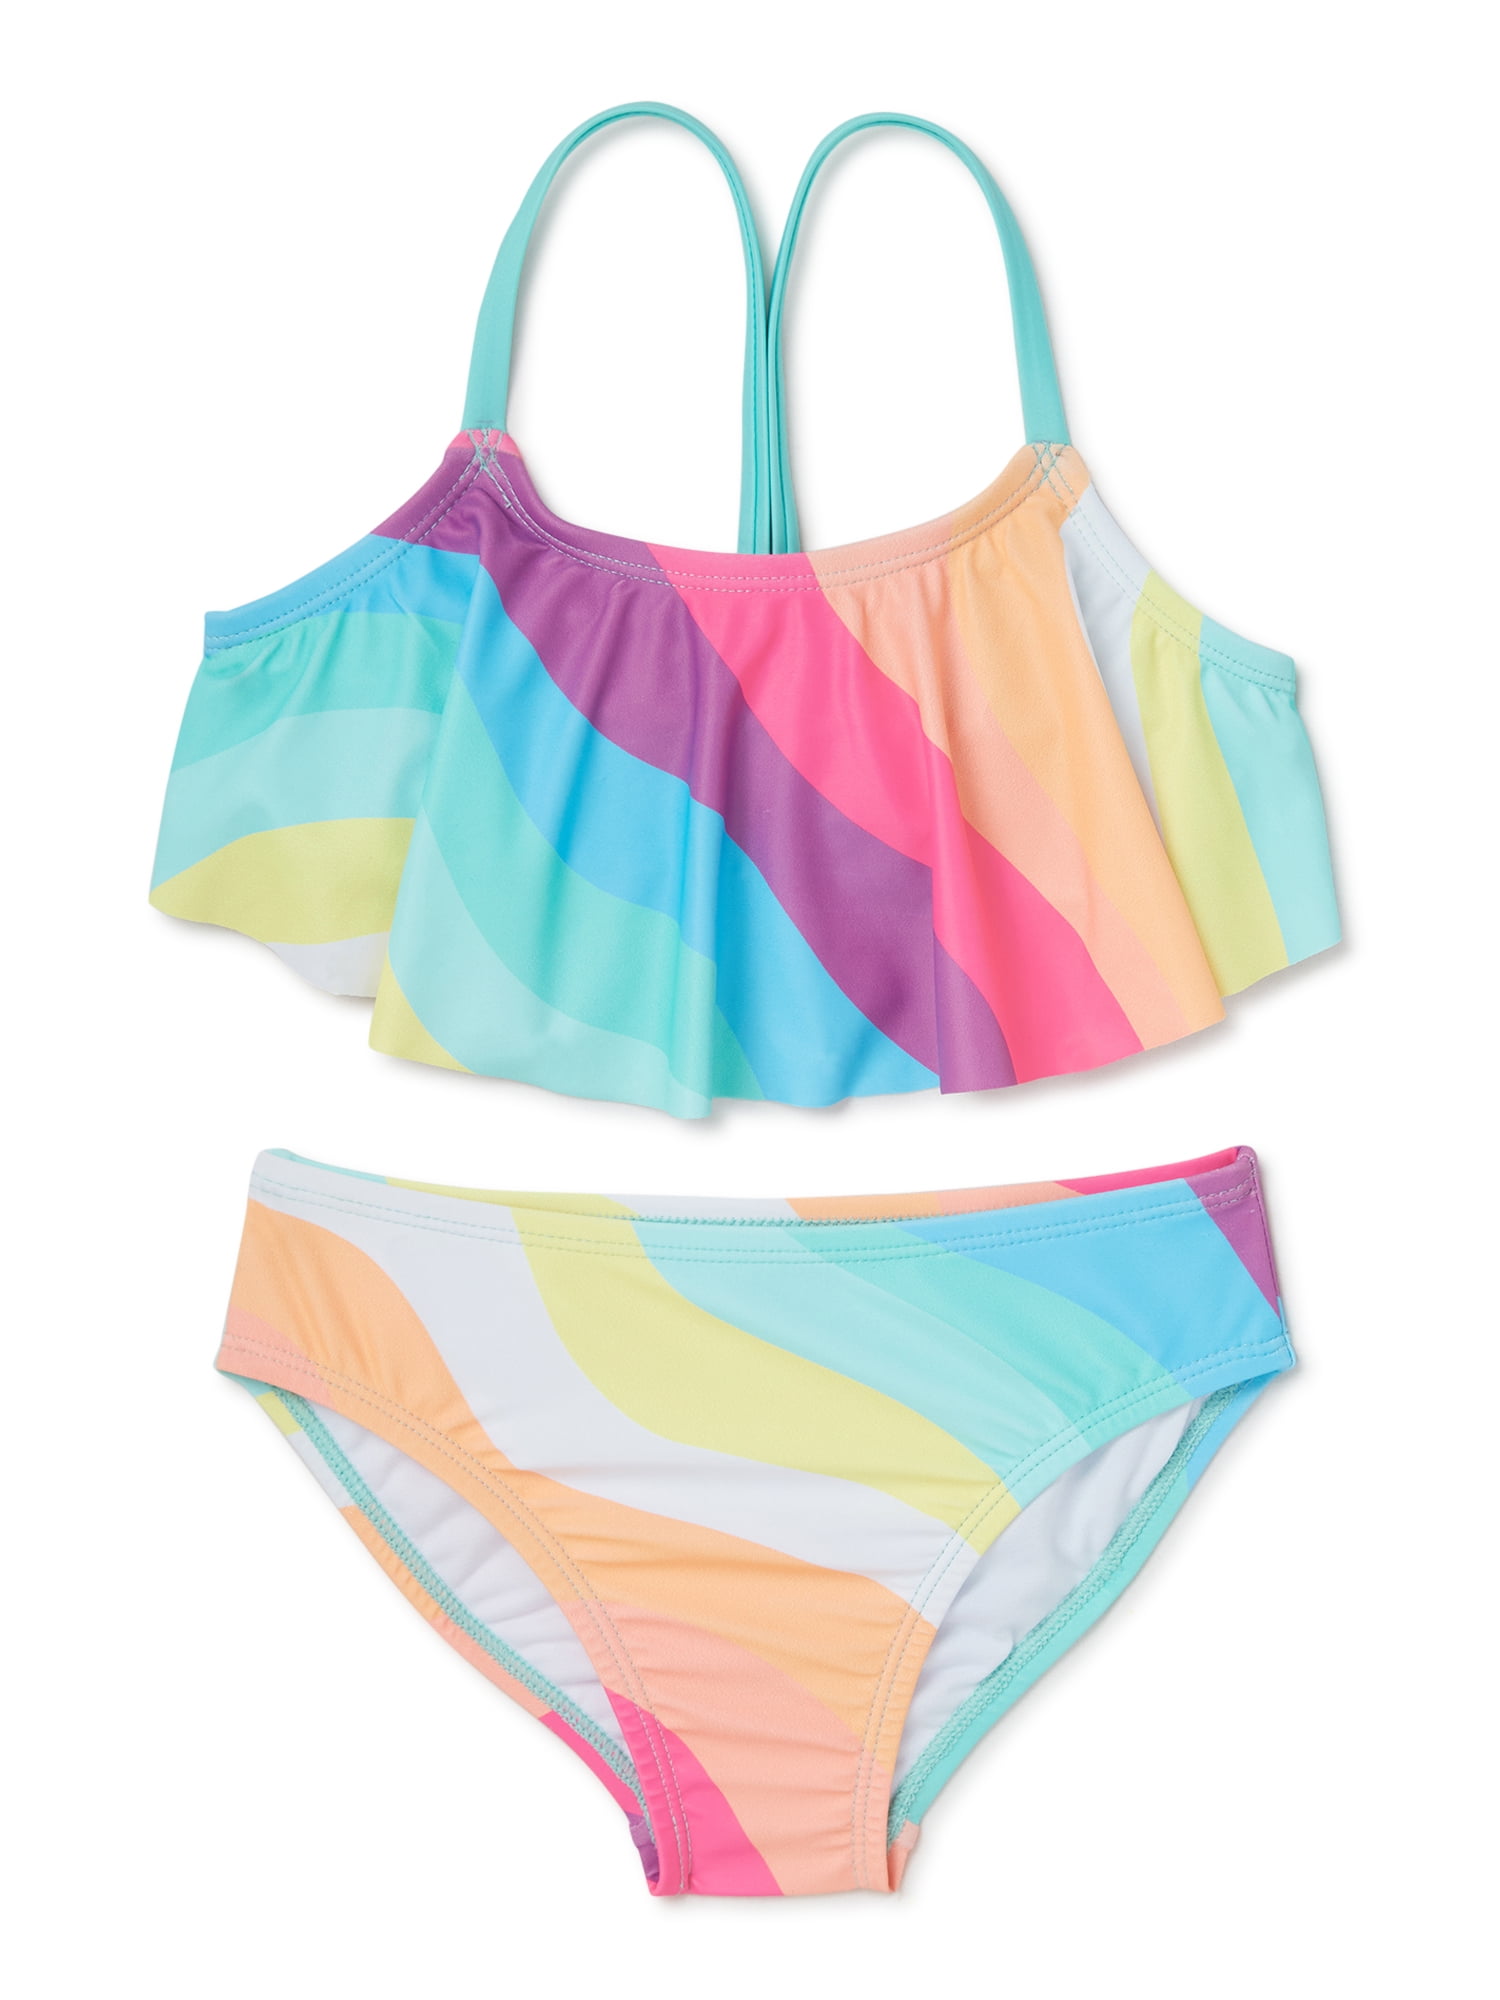 Shelloha Girls Flounce Bikini Top and Bottoms Swim Set with UPF 50+, 2 ...